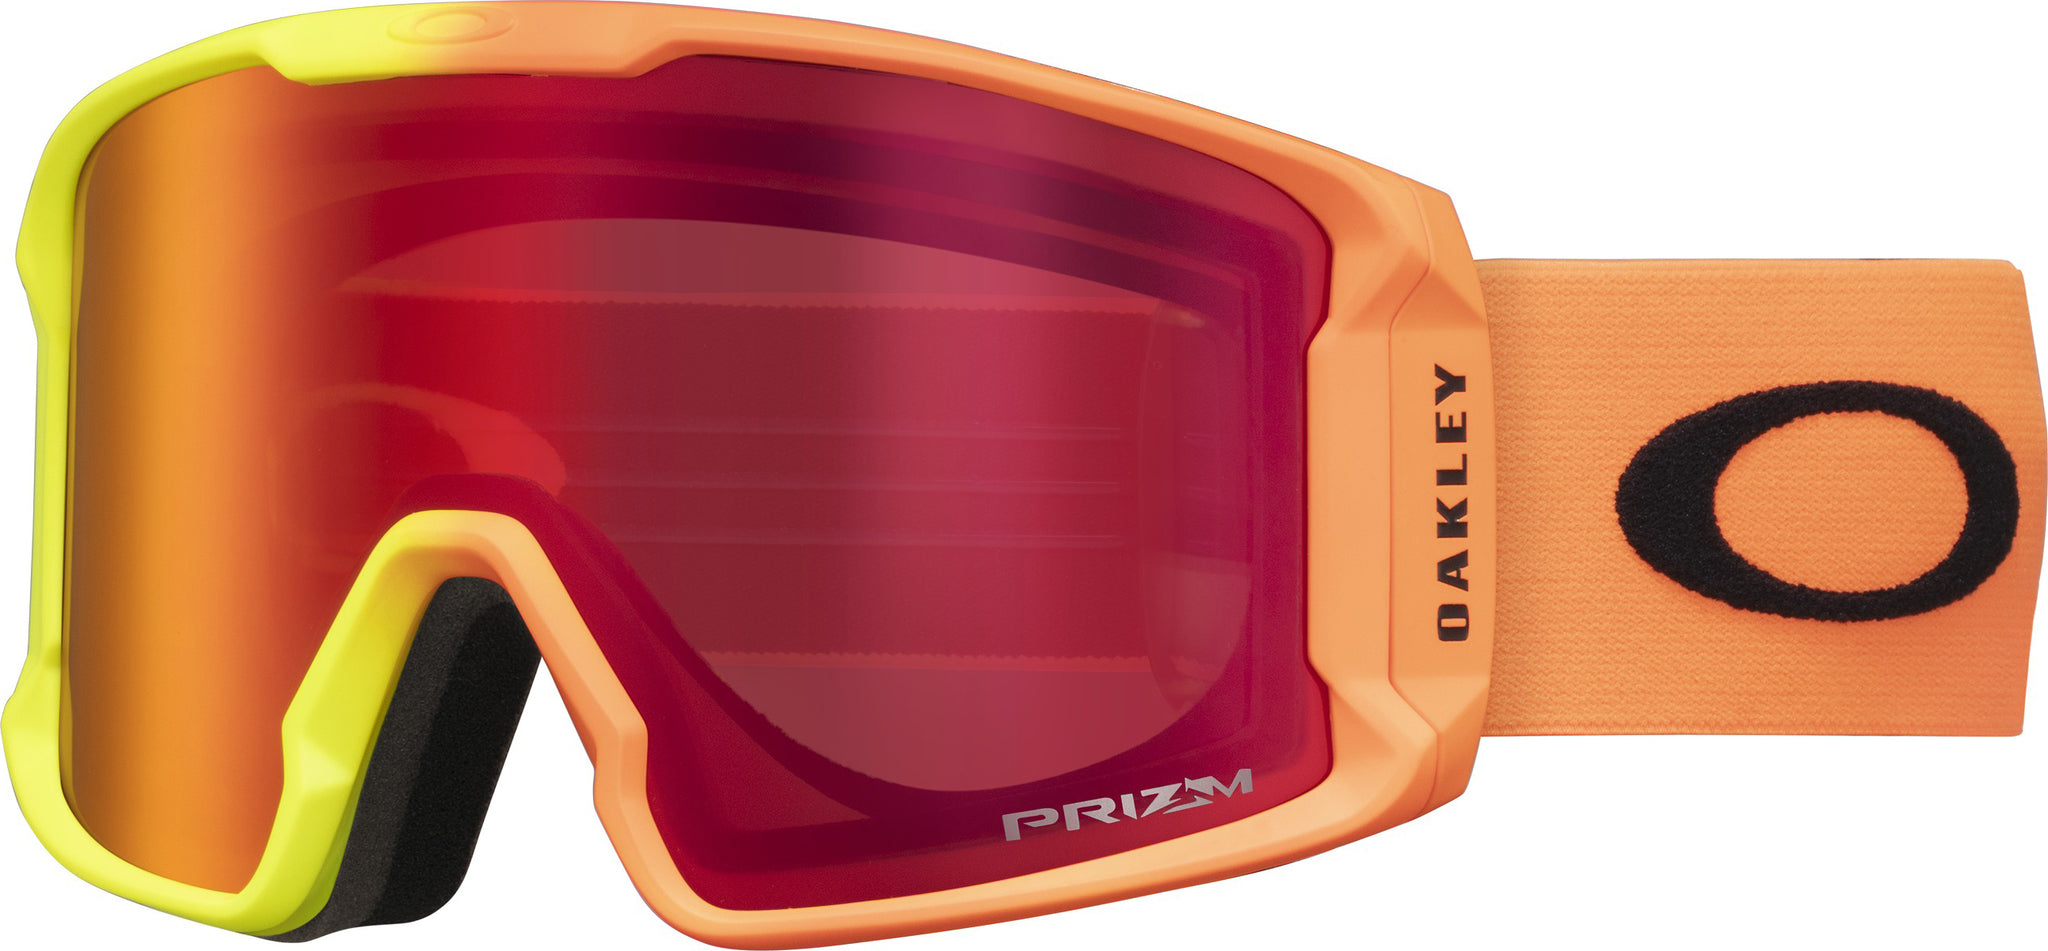 Oakley Line Miner - Prizm Torch Iridium Lens Goggles - Harmony Fade  Collection